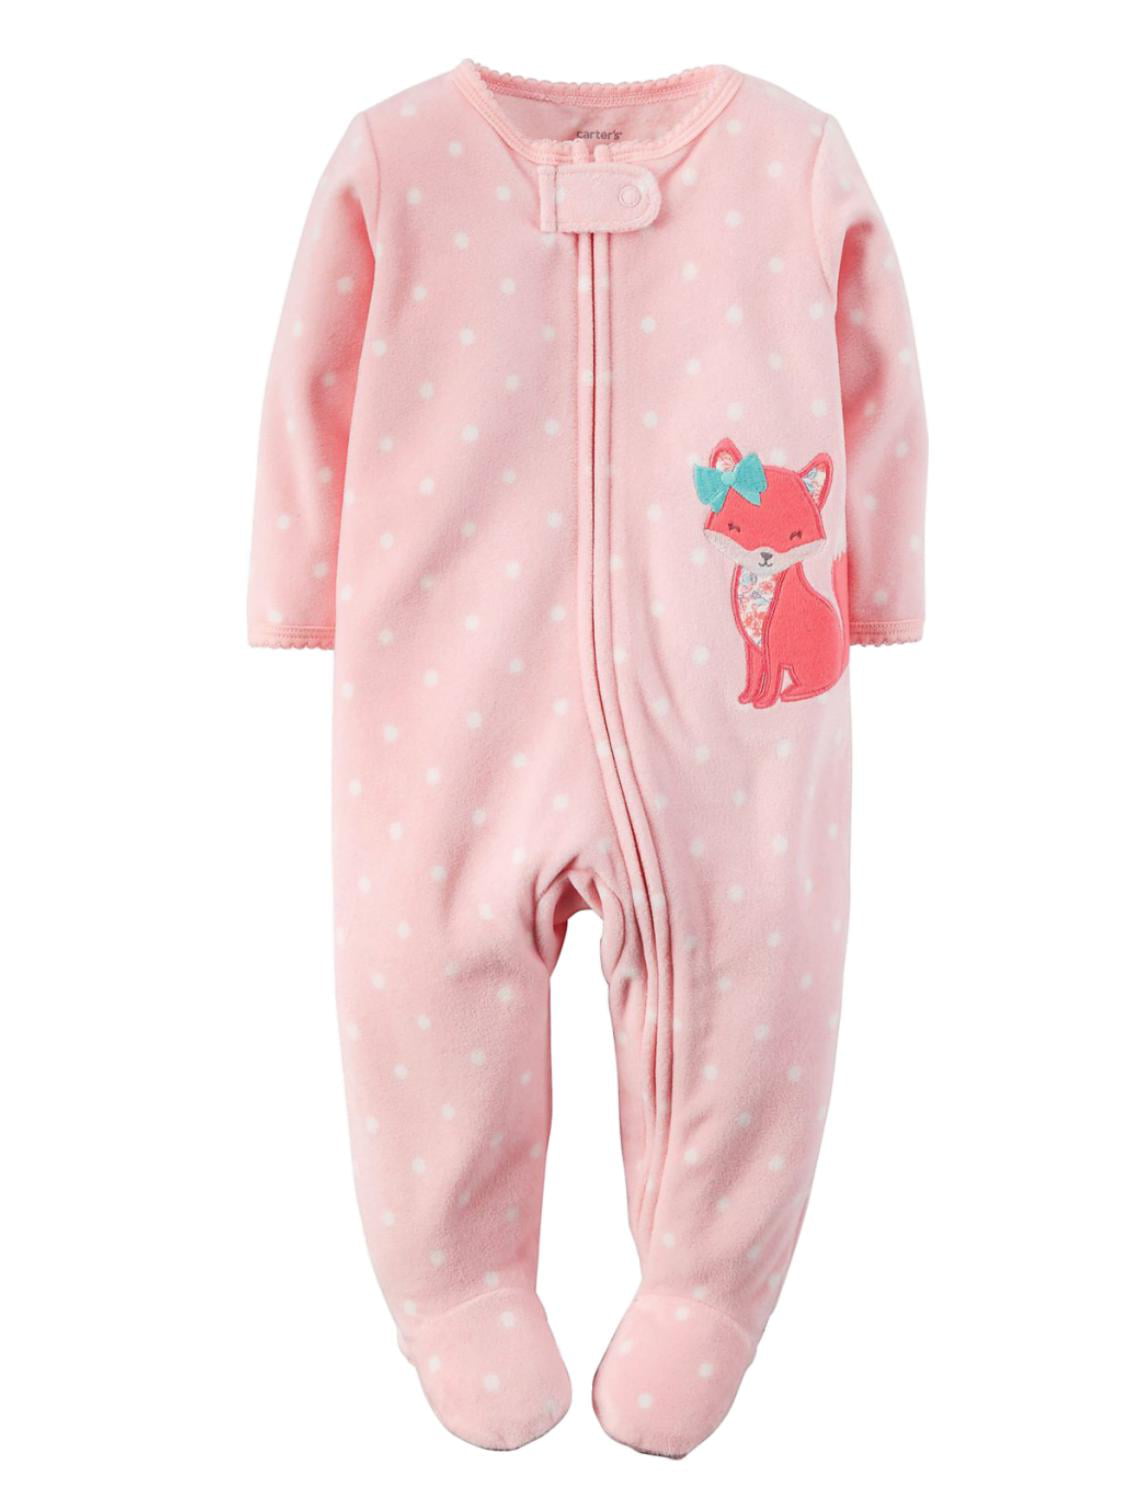 Carter's Carters Infant Girls Pink Fox Micro Fleece Sleeper Sleep & Play Pajama 3 Months